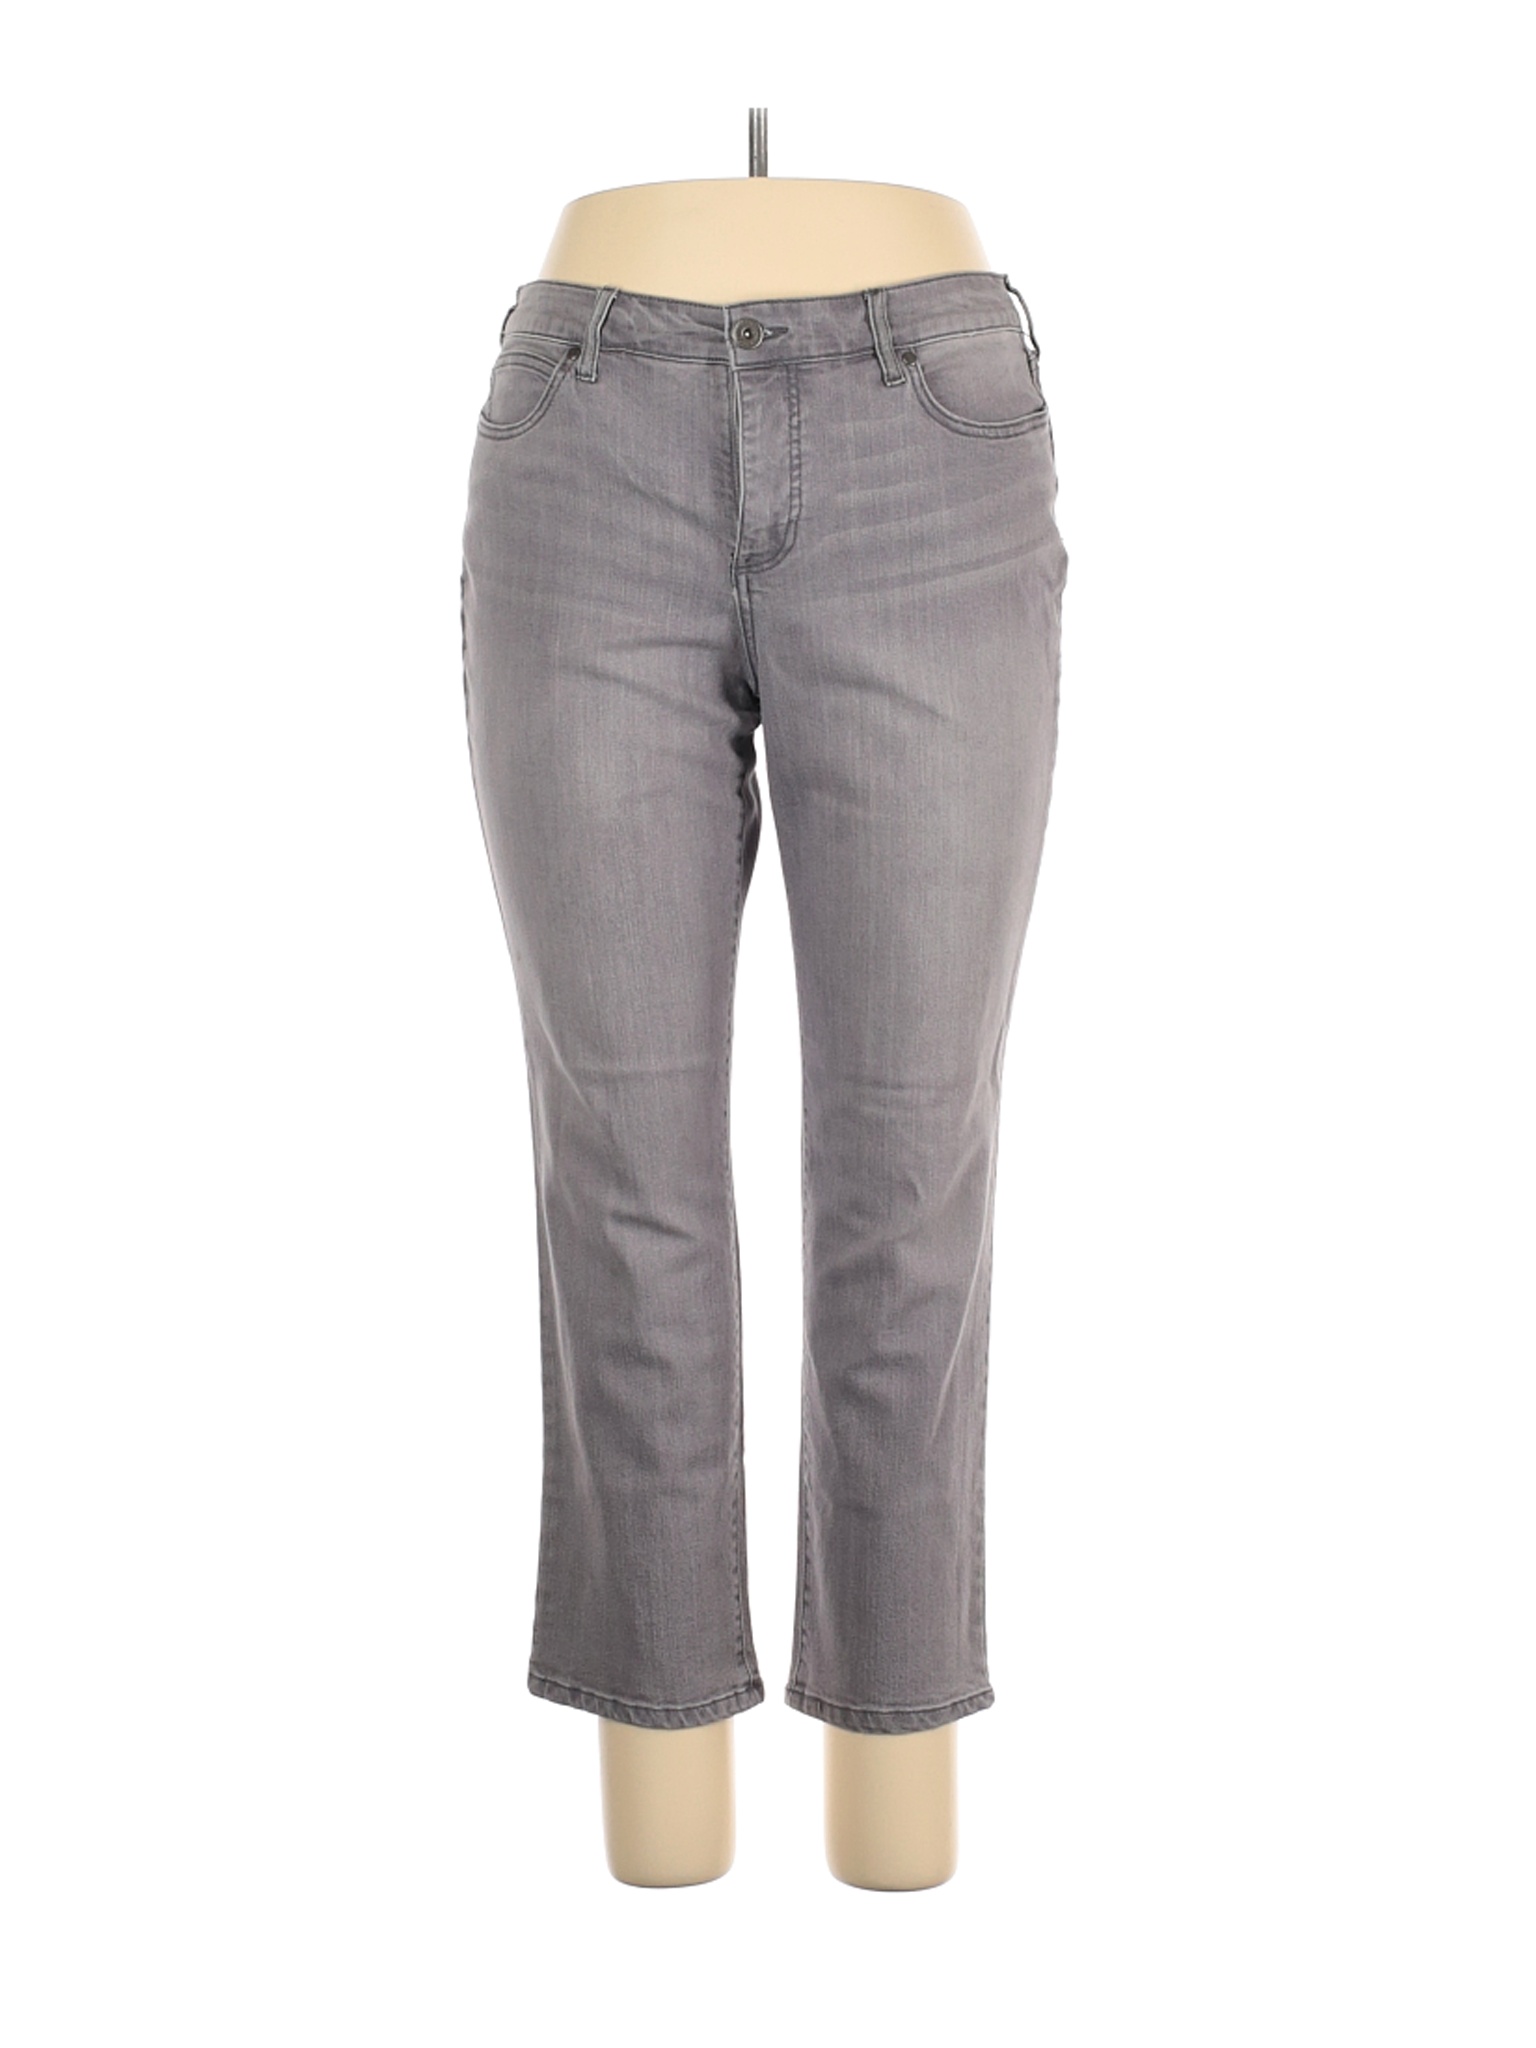 Bandolino Women Gray Jeans 14 Petites | eBay